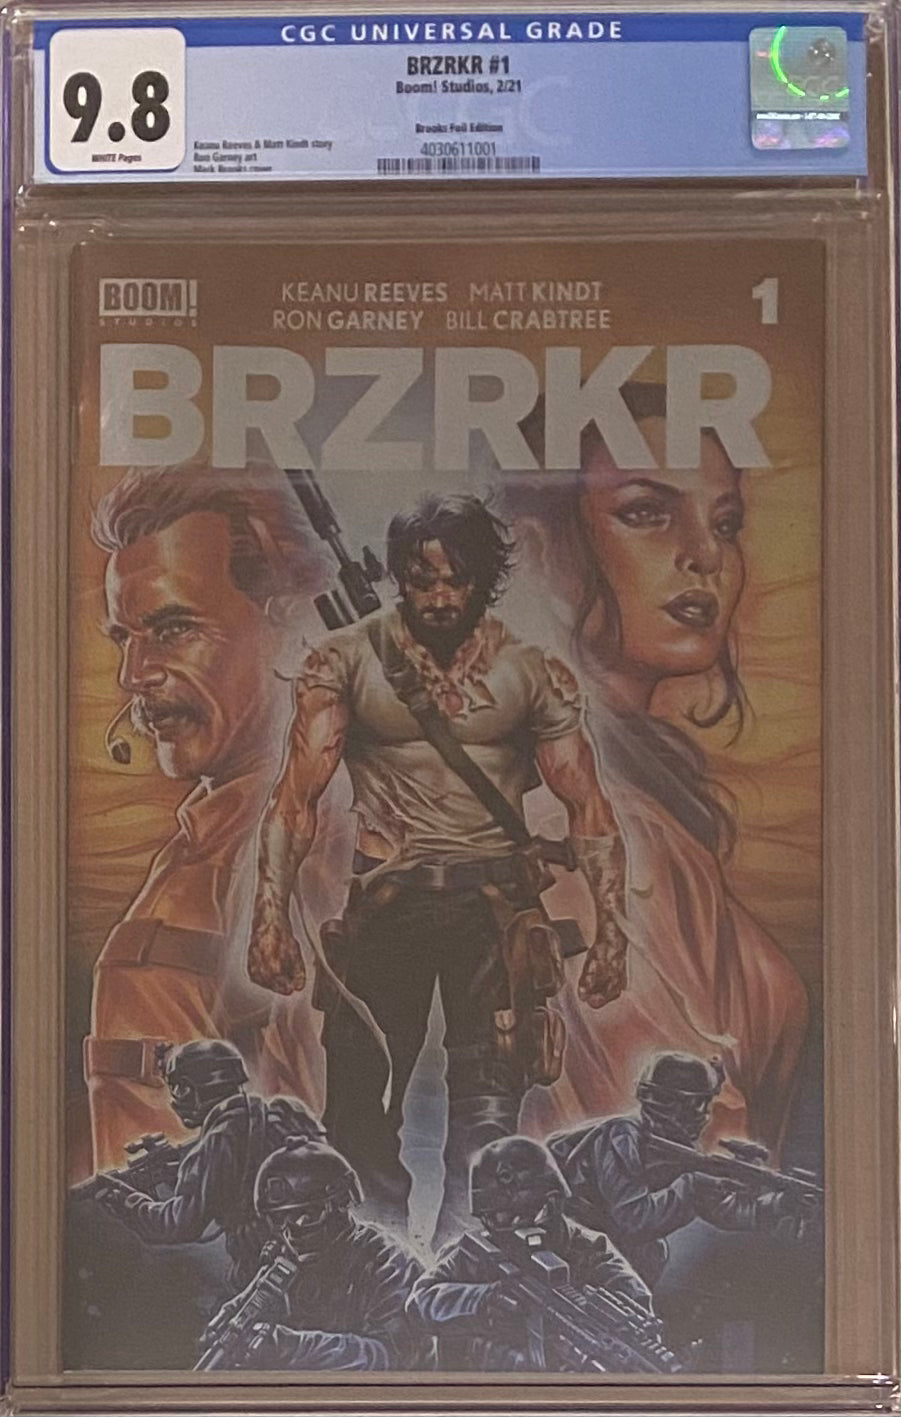 BRZRKR #1 Brooks Foil Edition CGC 9.8